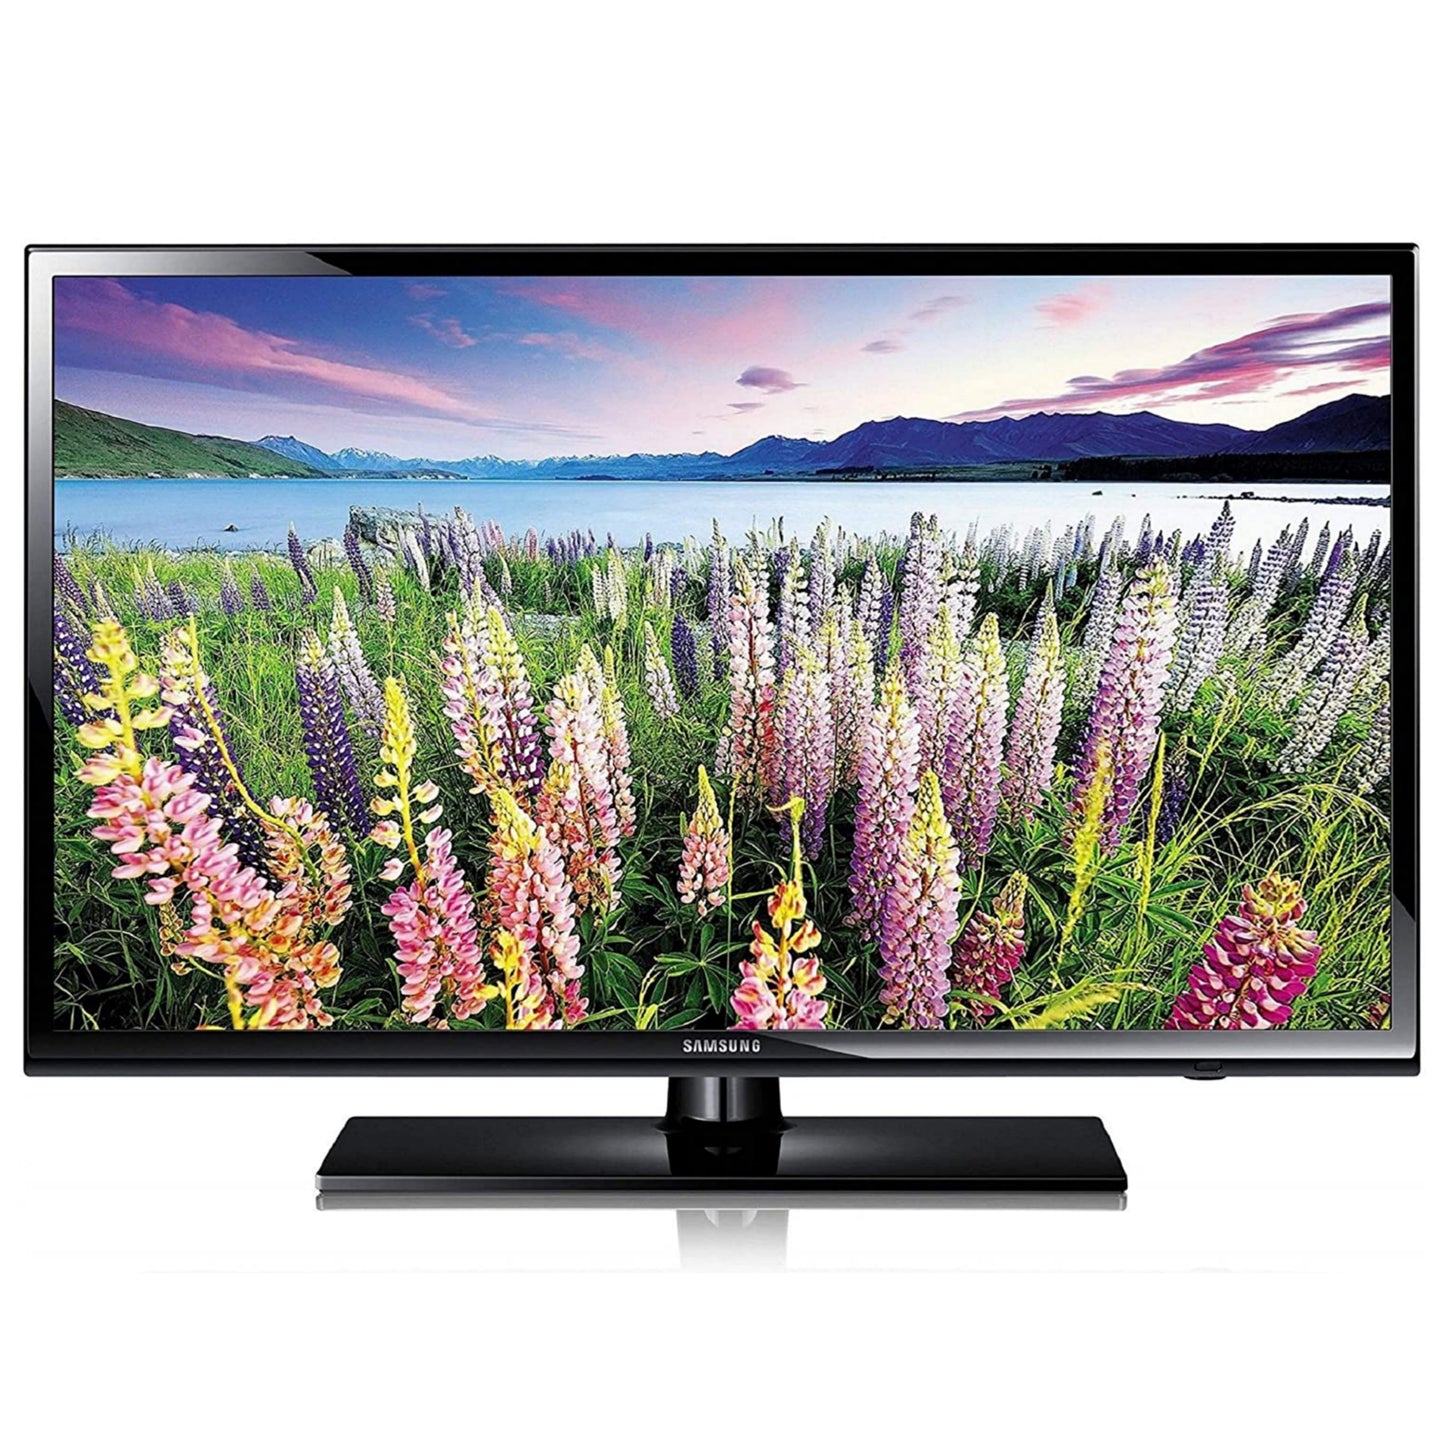 SAMSUNG 32 Inch Full HD LED TV - London Used